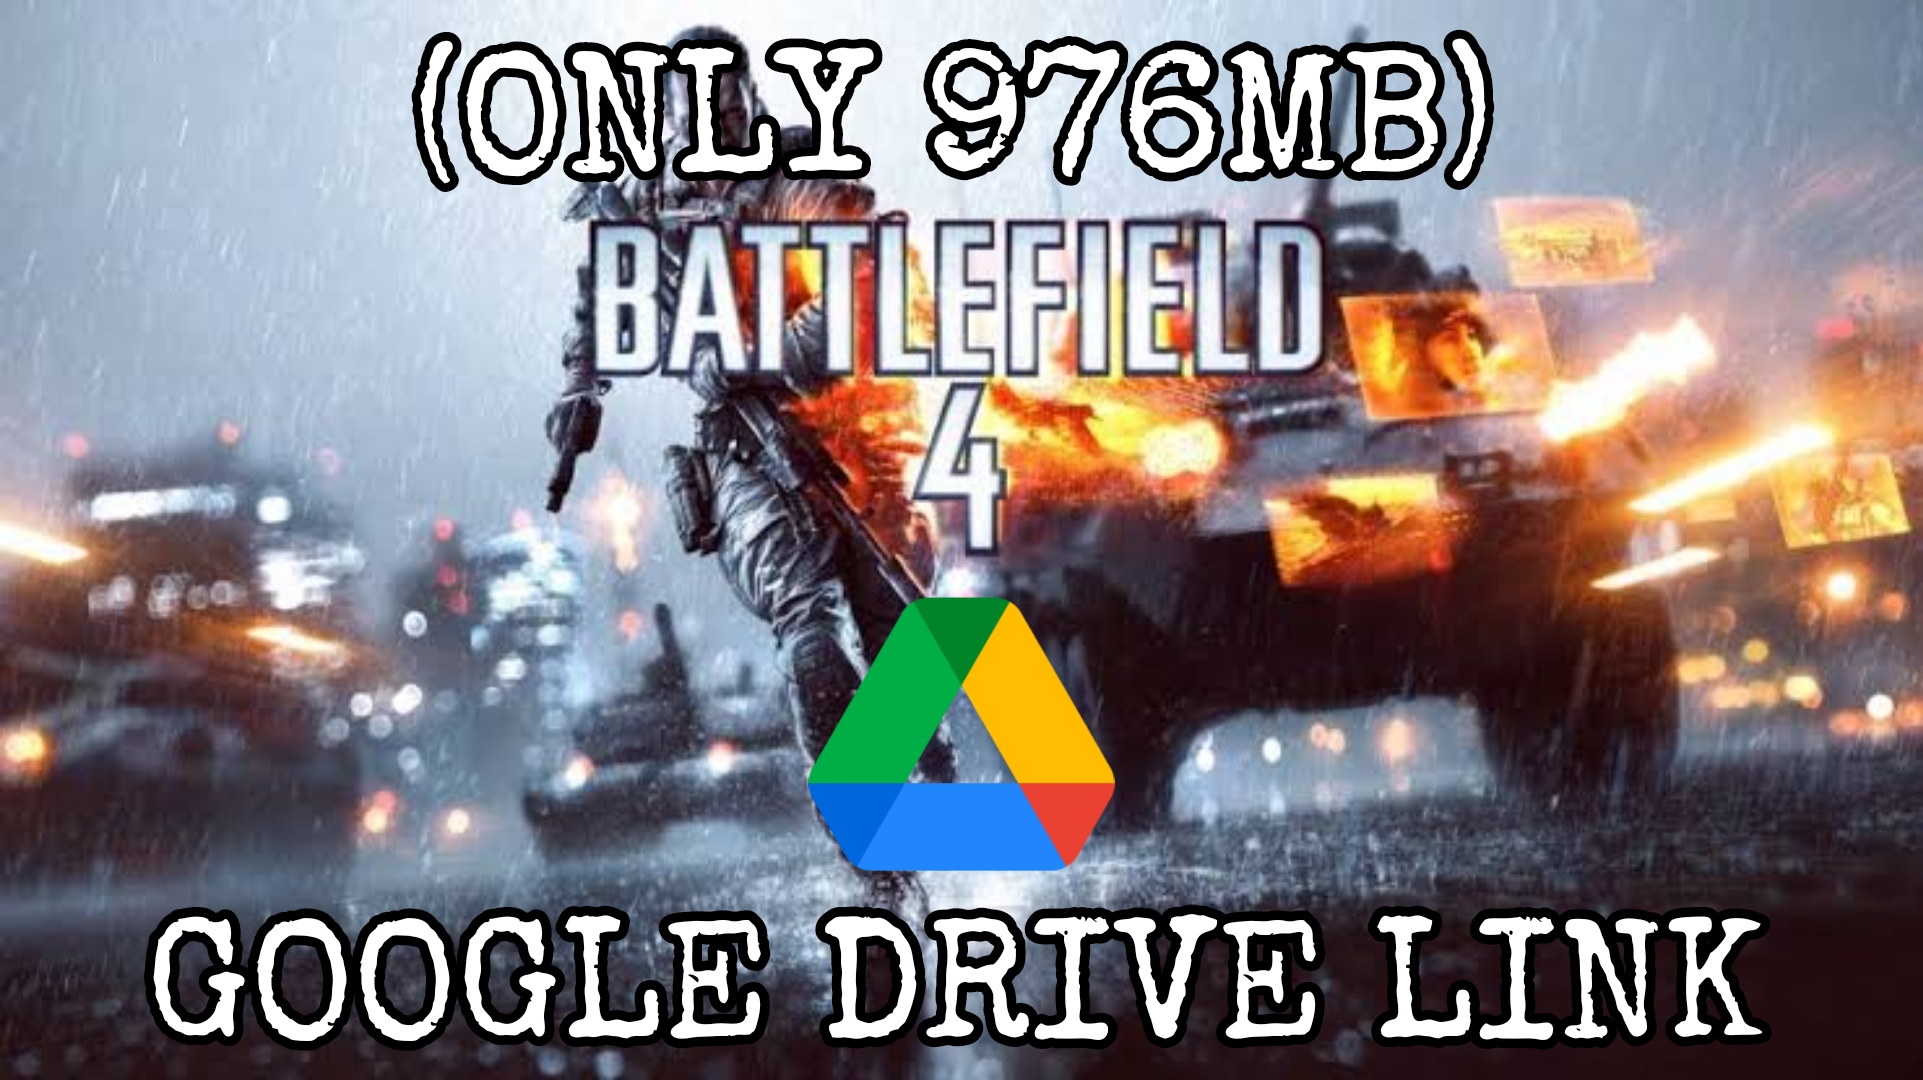 Battlefield 4 - Battlelog (FR) - High quality stream and download -  Gamersyde